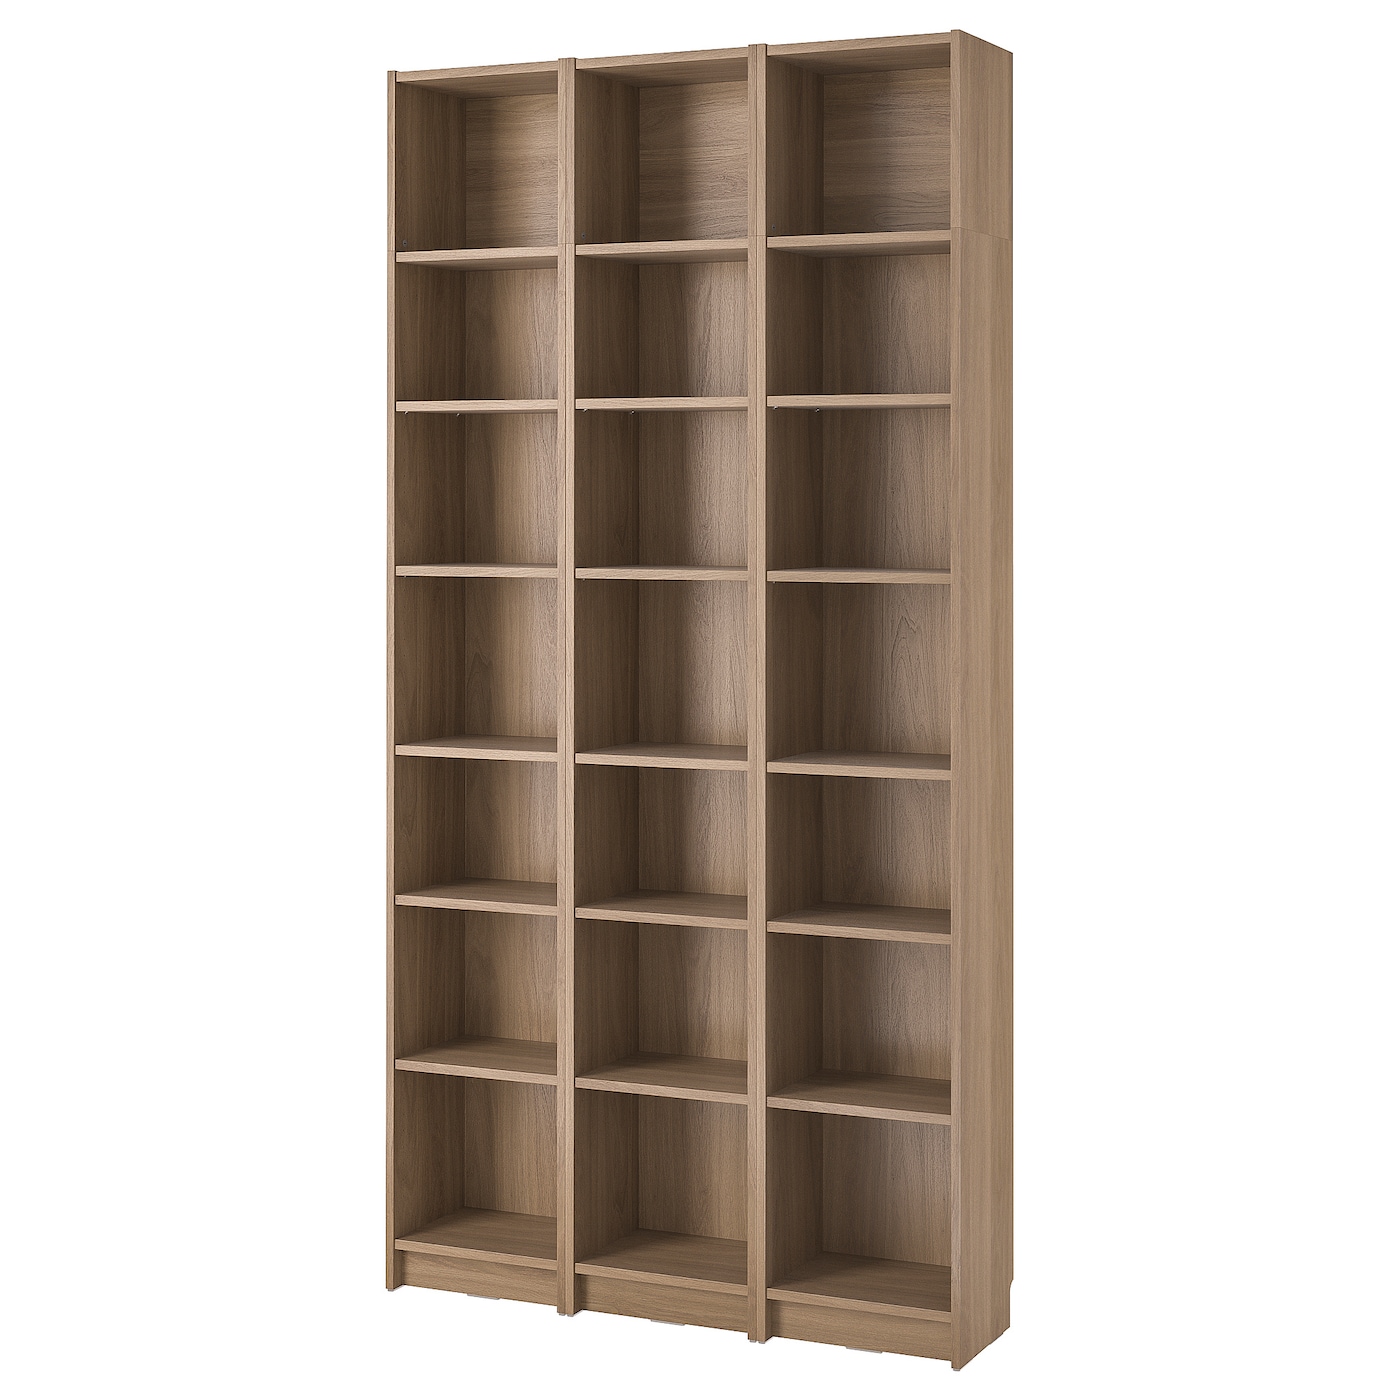 Книжный шкаф -  BILLY IKEA/ БИЛЛИ ИКЕА, 120х28х237 см,под беленый дуб